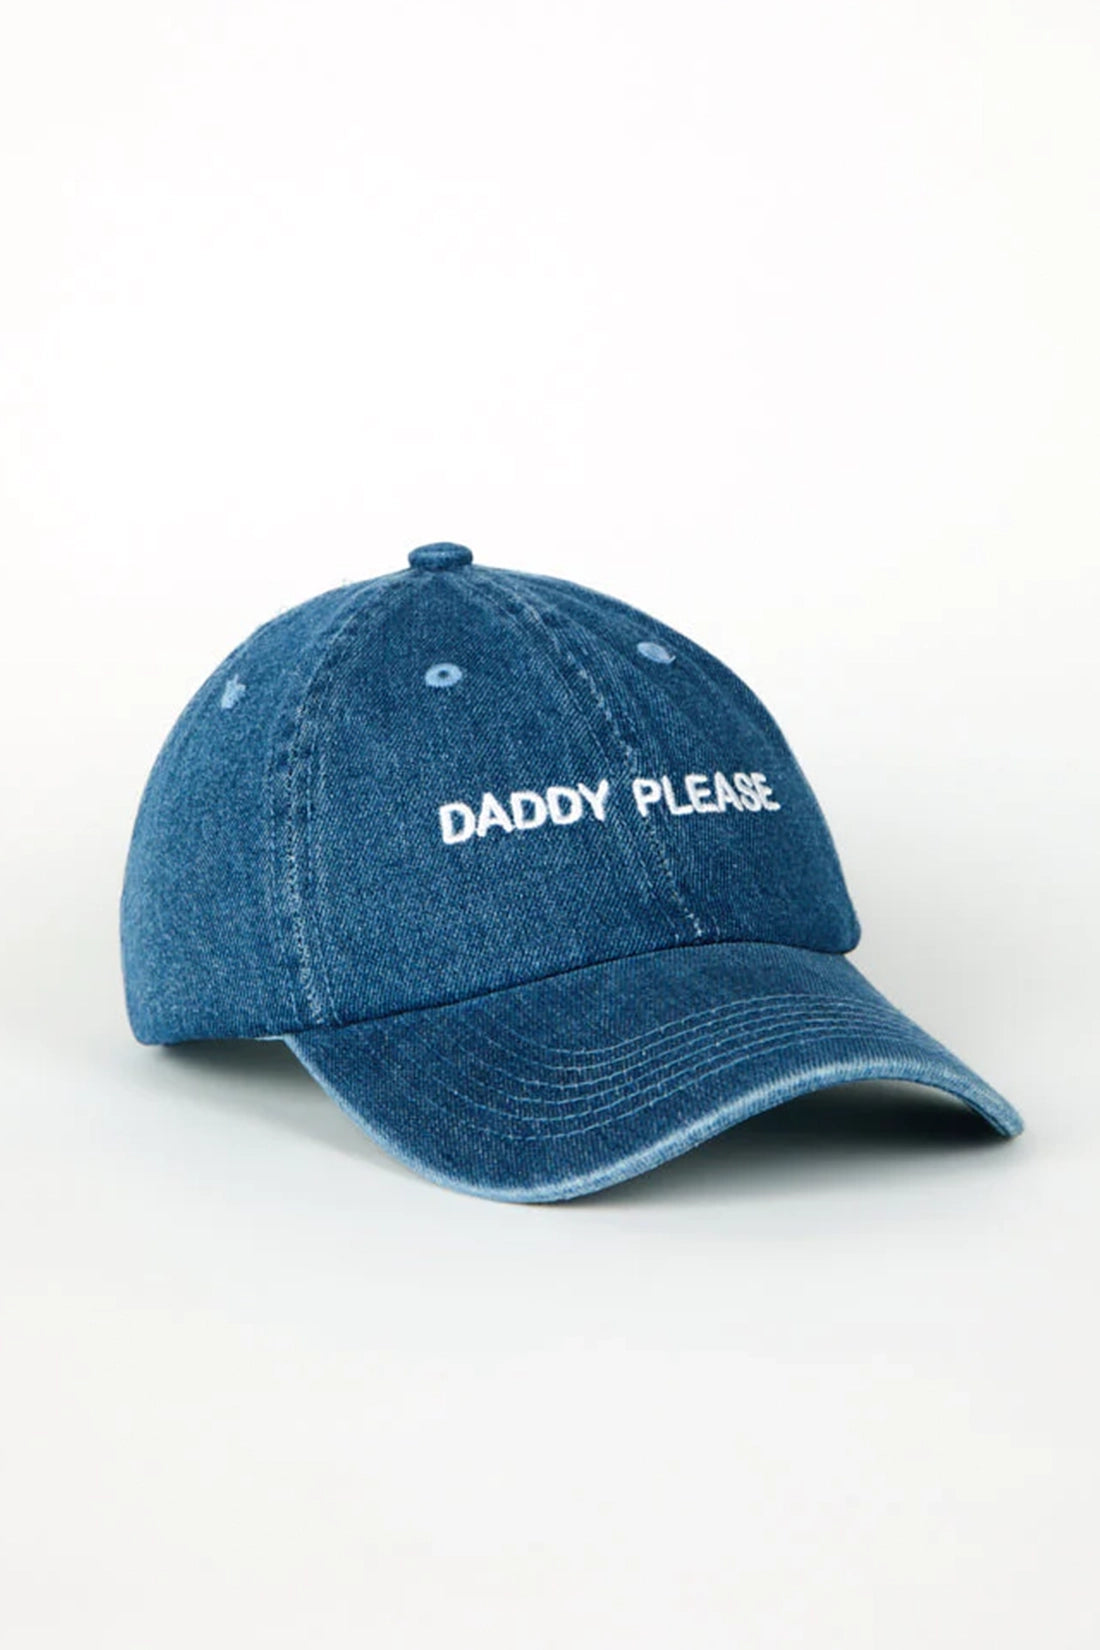 Daddy Please Cap - Denim